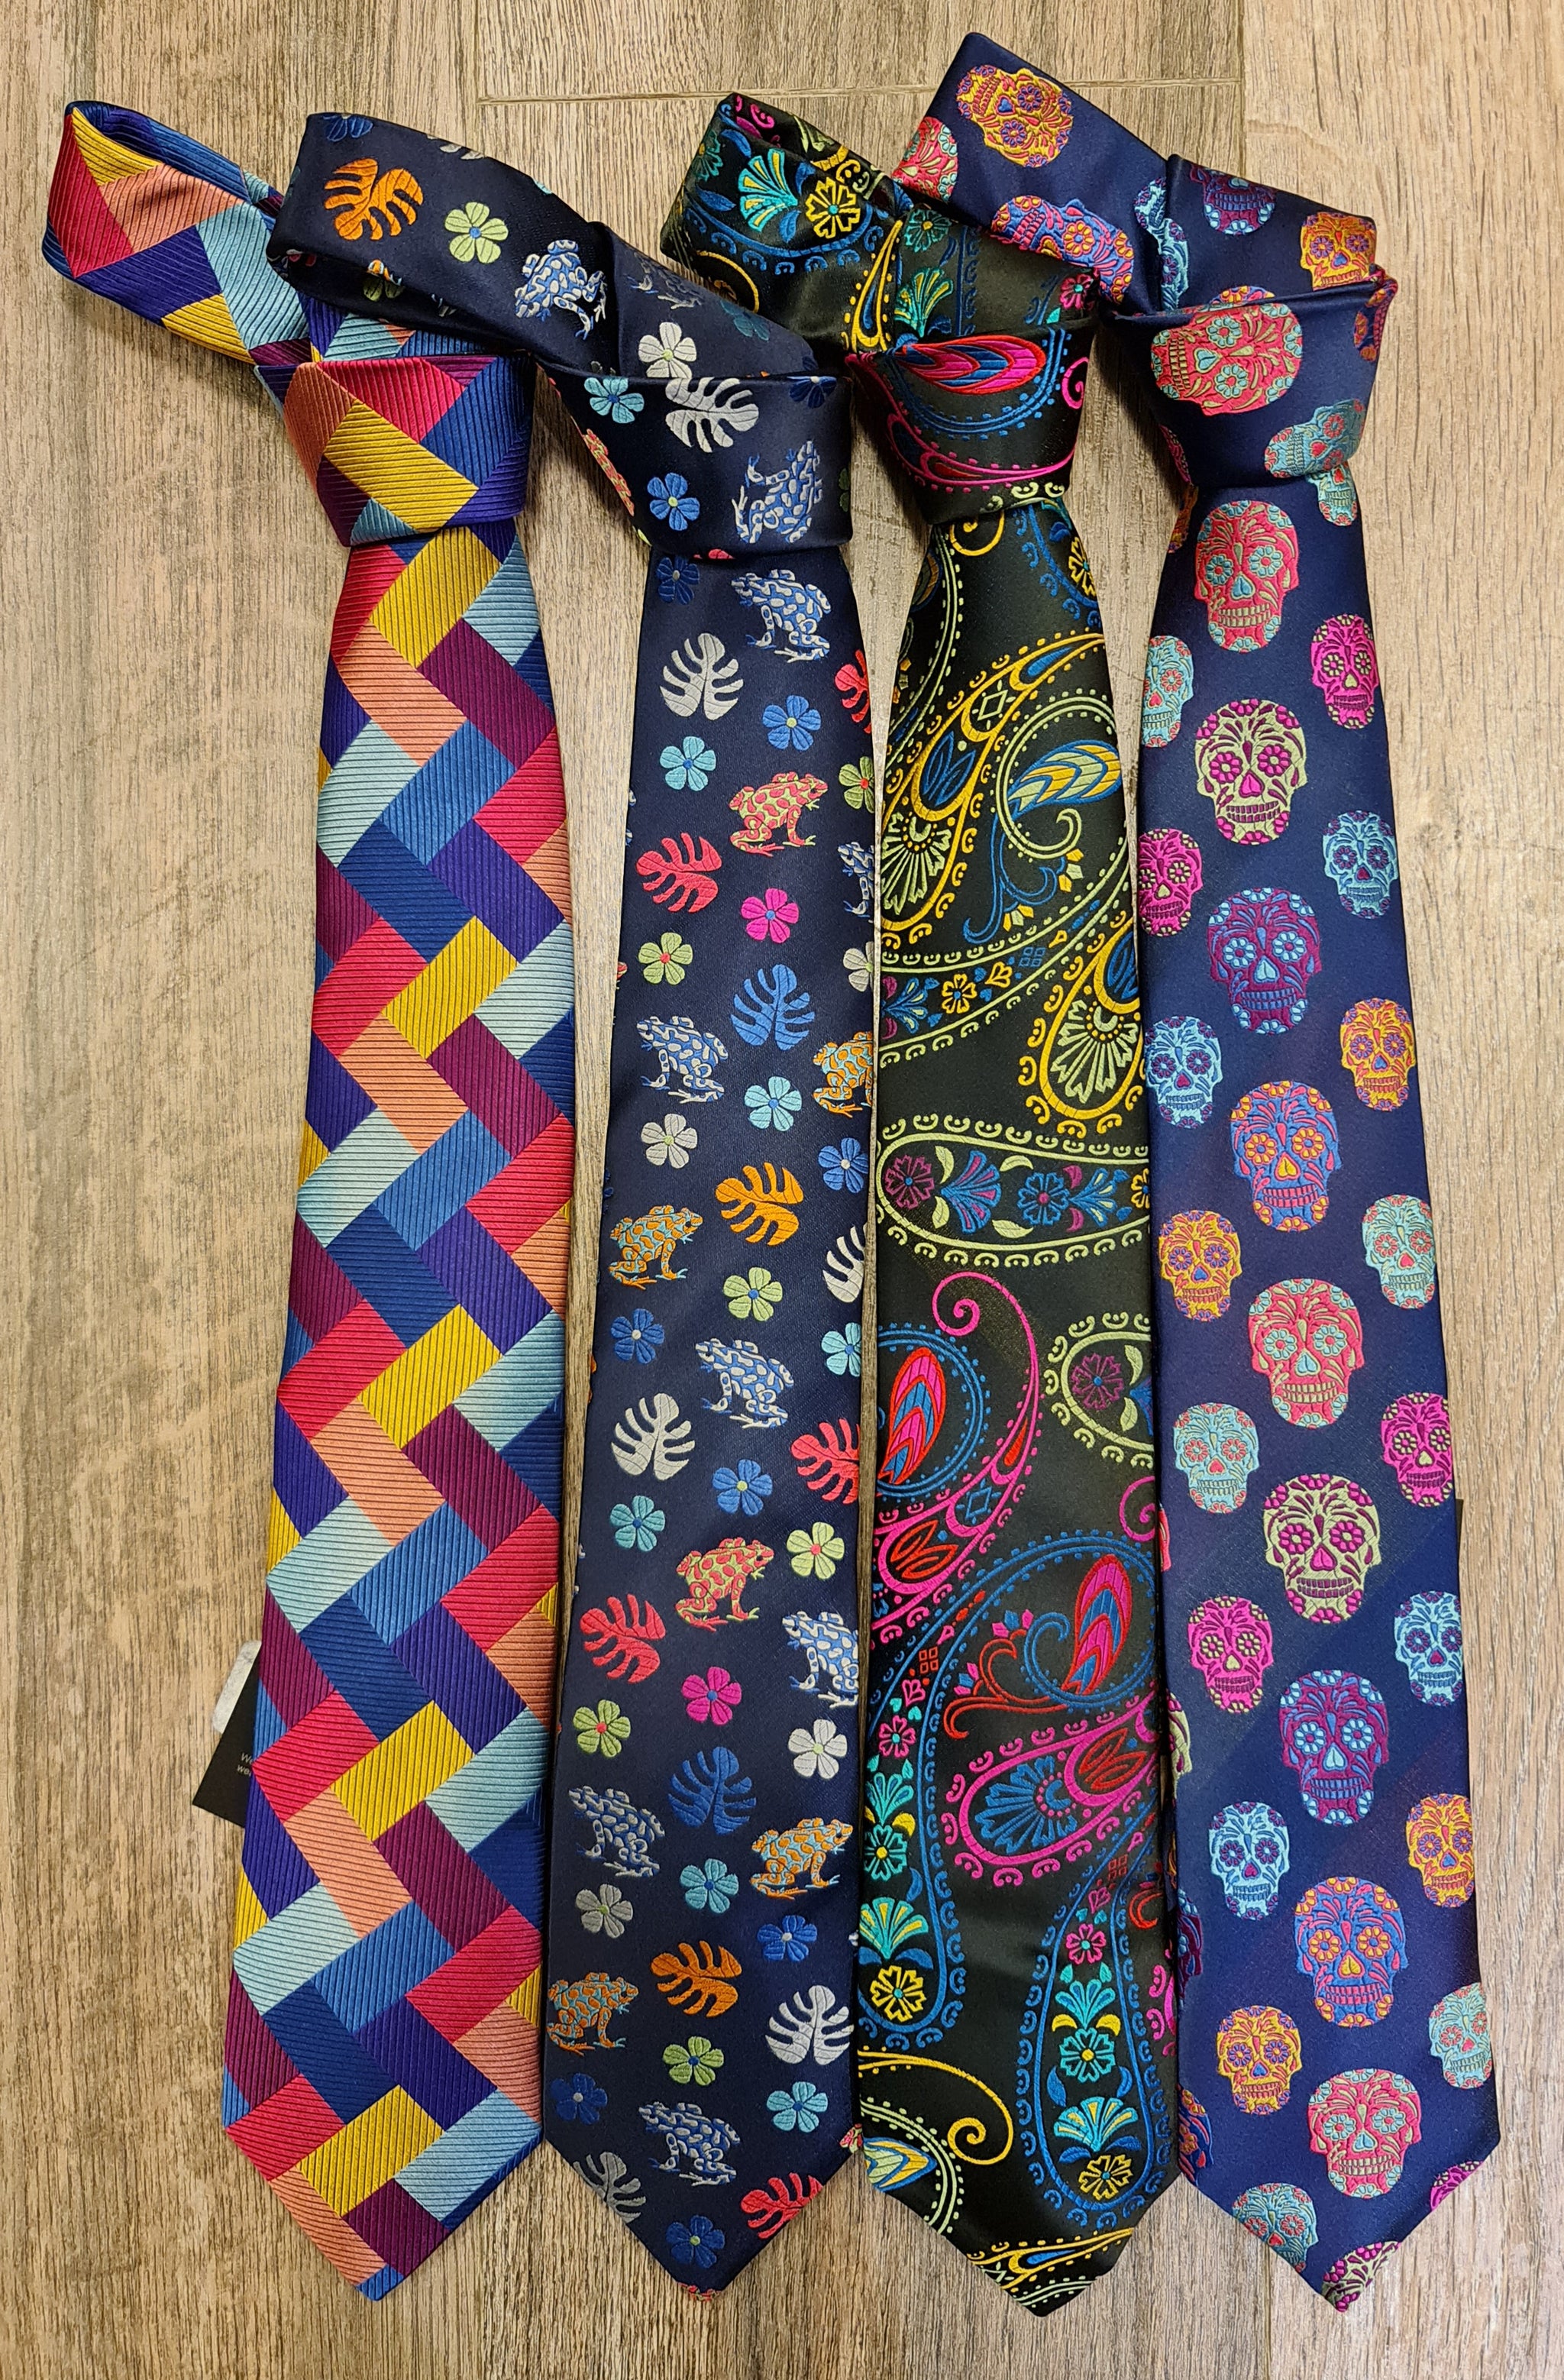 Limited Edition Silk ties from Van Buck England